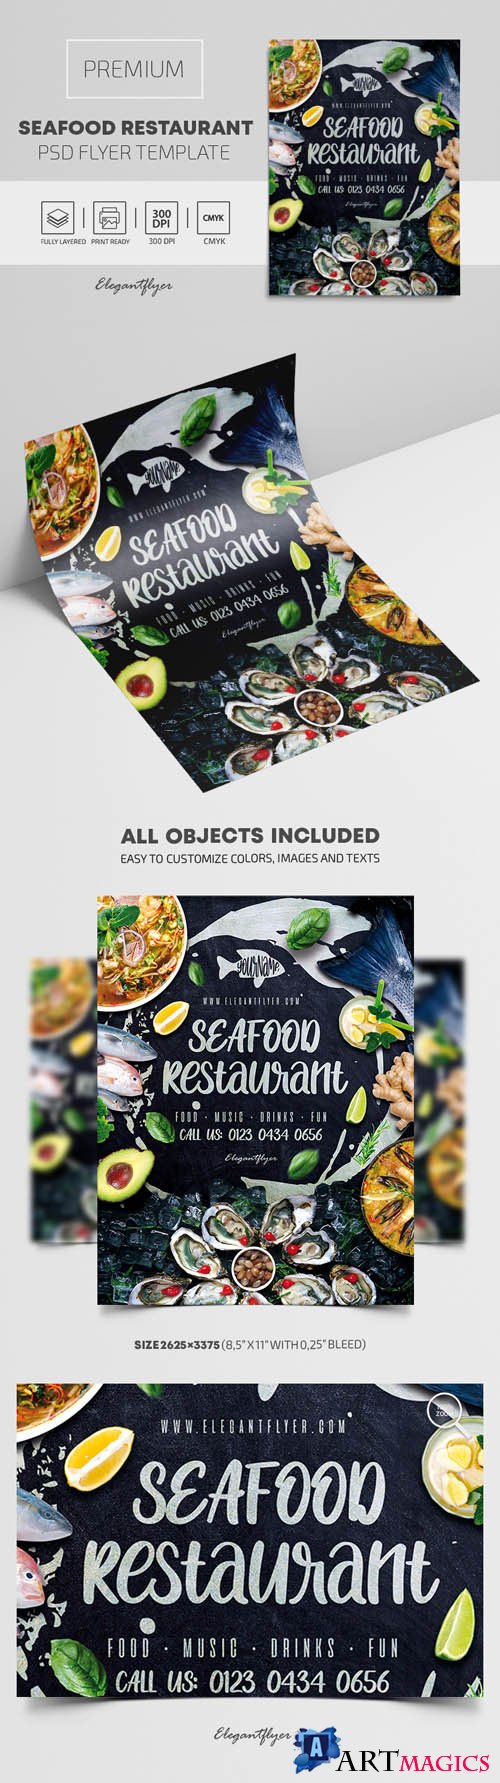 Seafood Restaurant Premium PSD Flyer Template